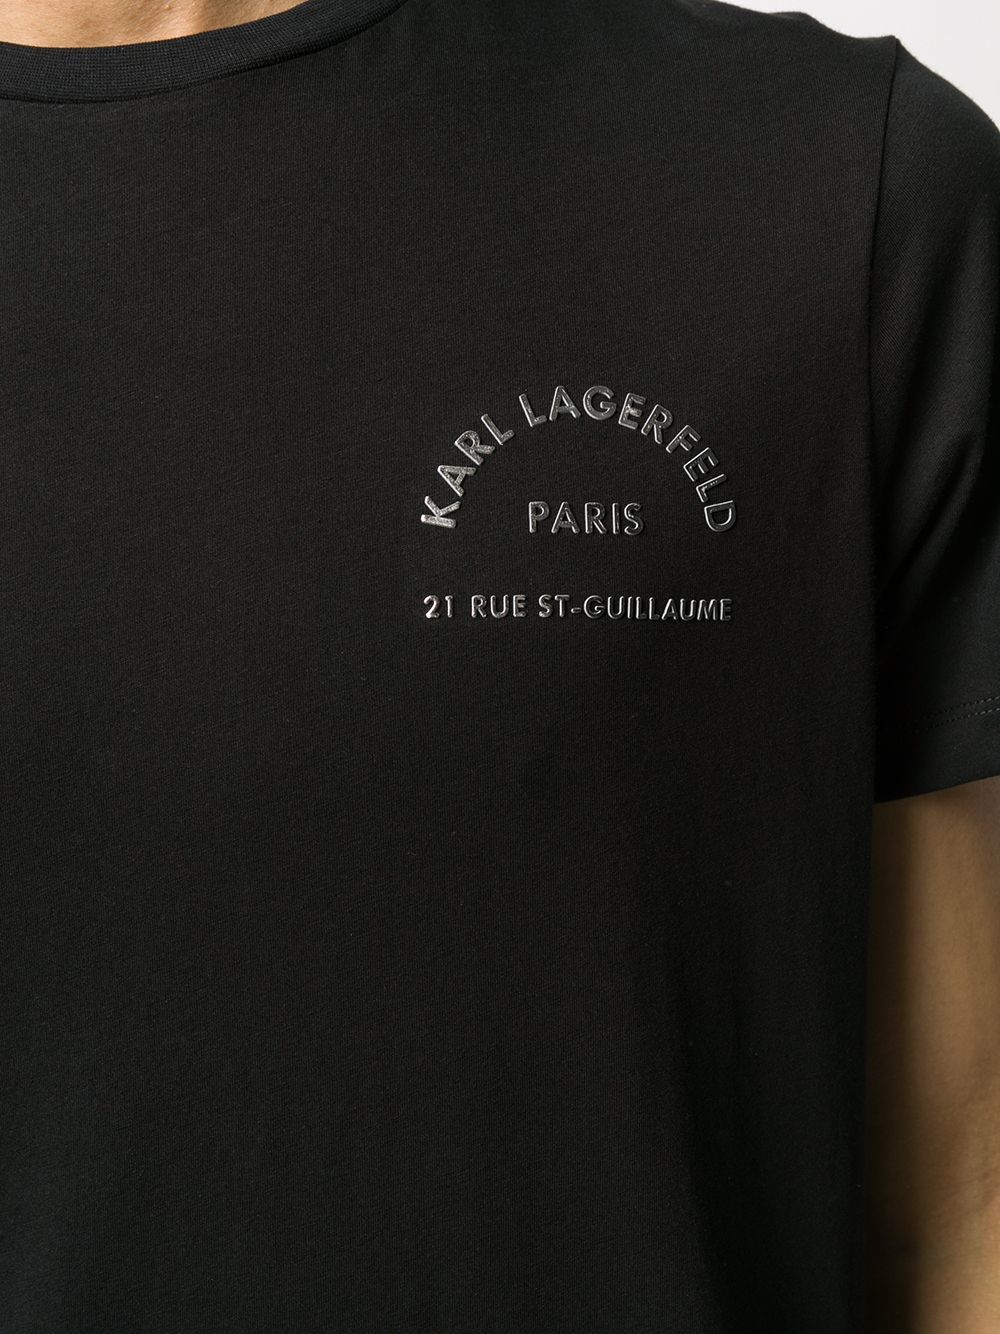 Karl Lagerfeld Black/Silver T-Shirt - Rogue